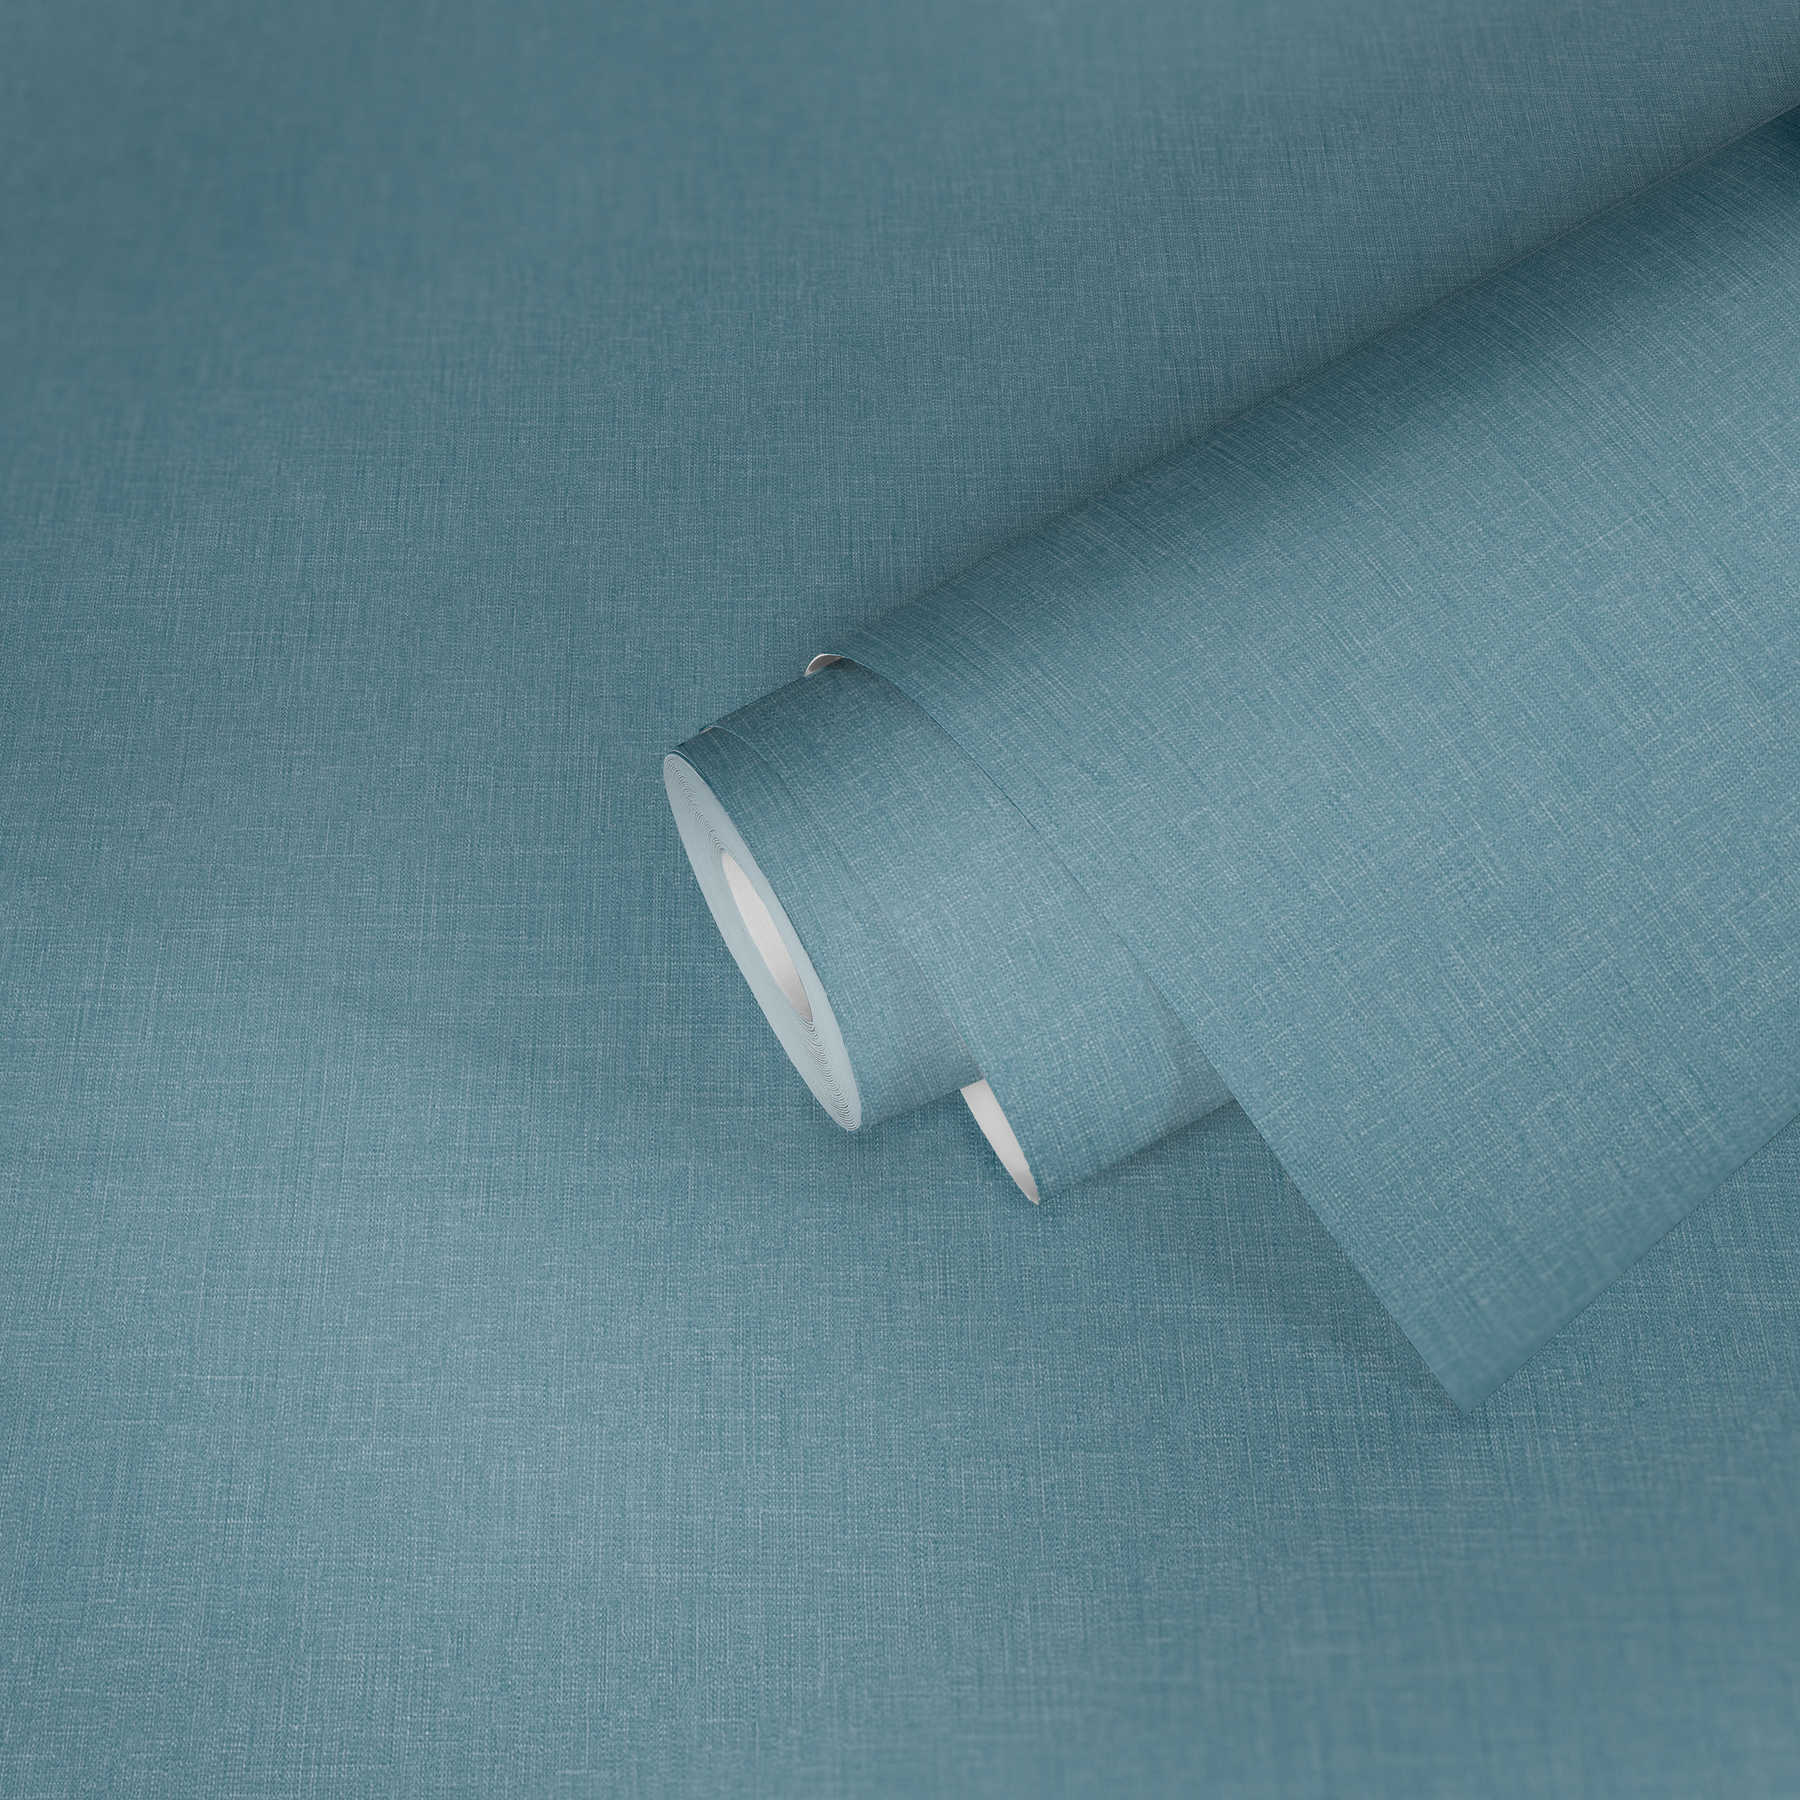             Vliestapete Blau meliert mit Textilstruktur im Bouclé Stil
        